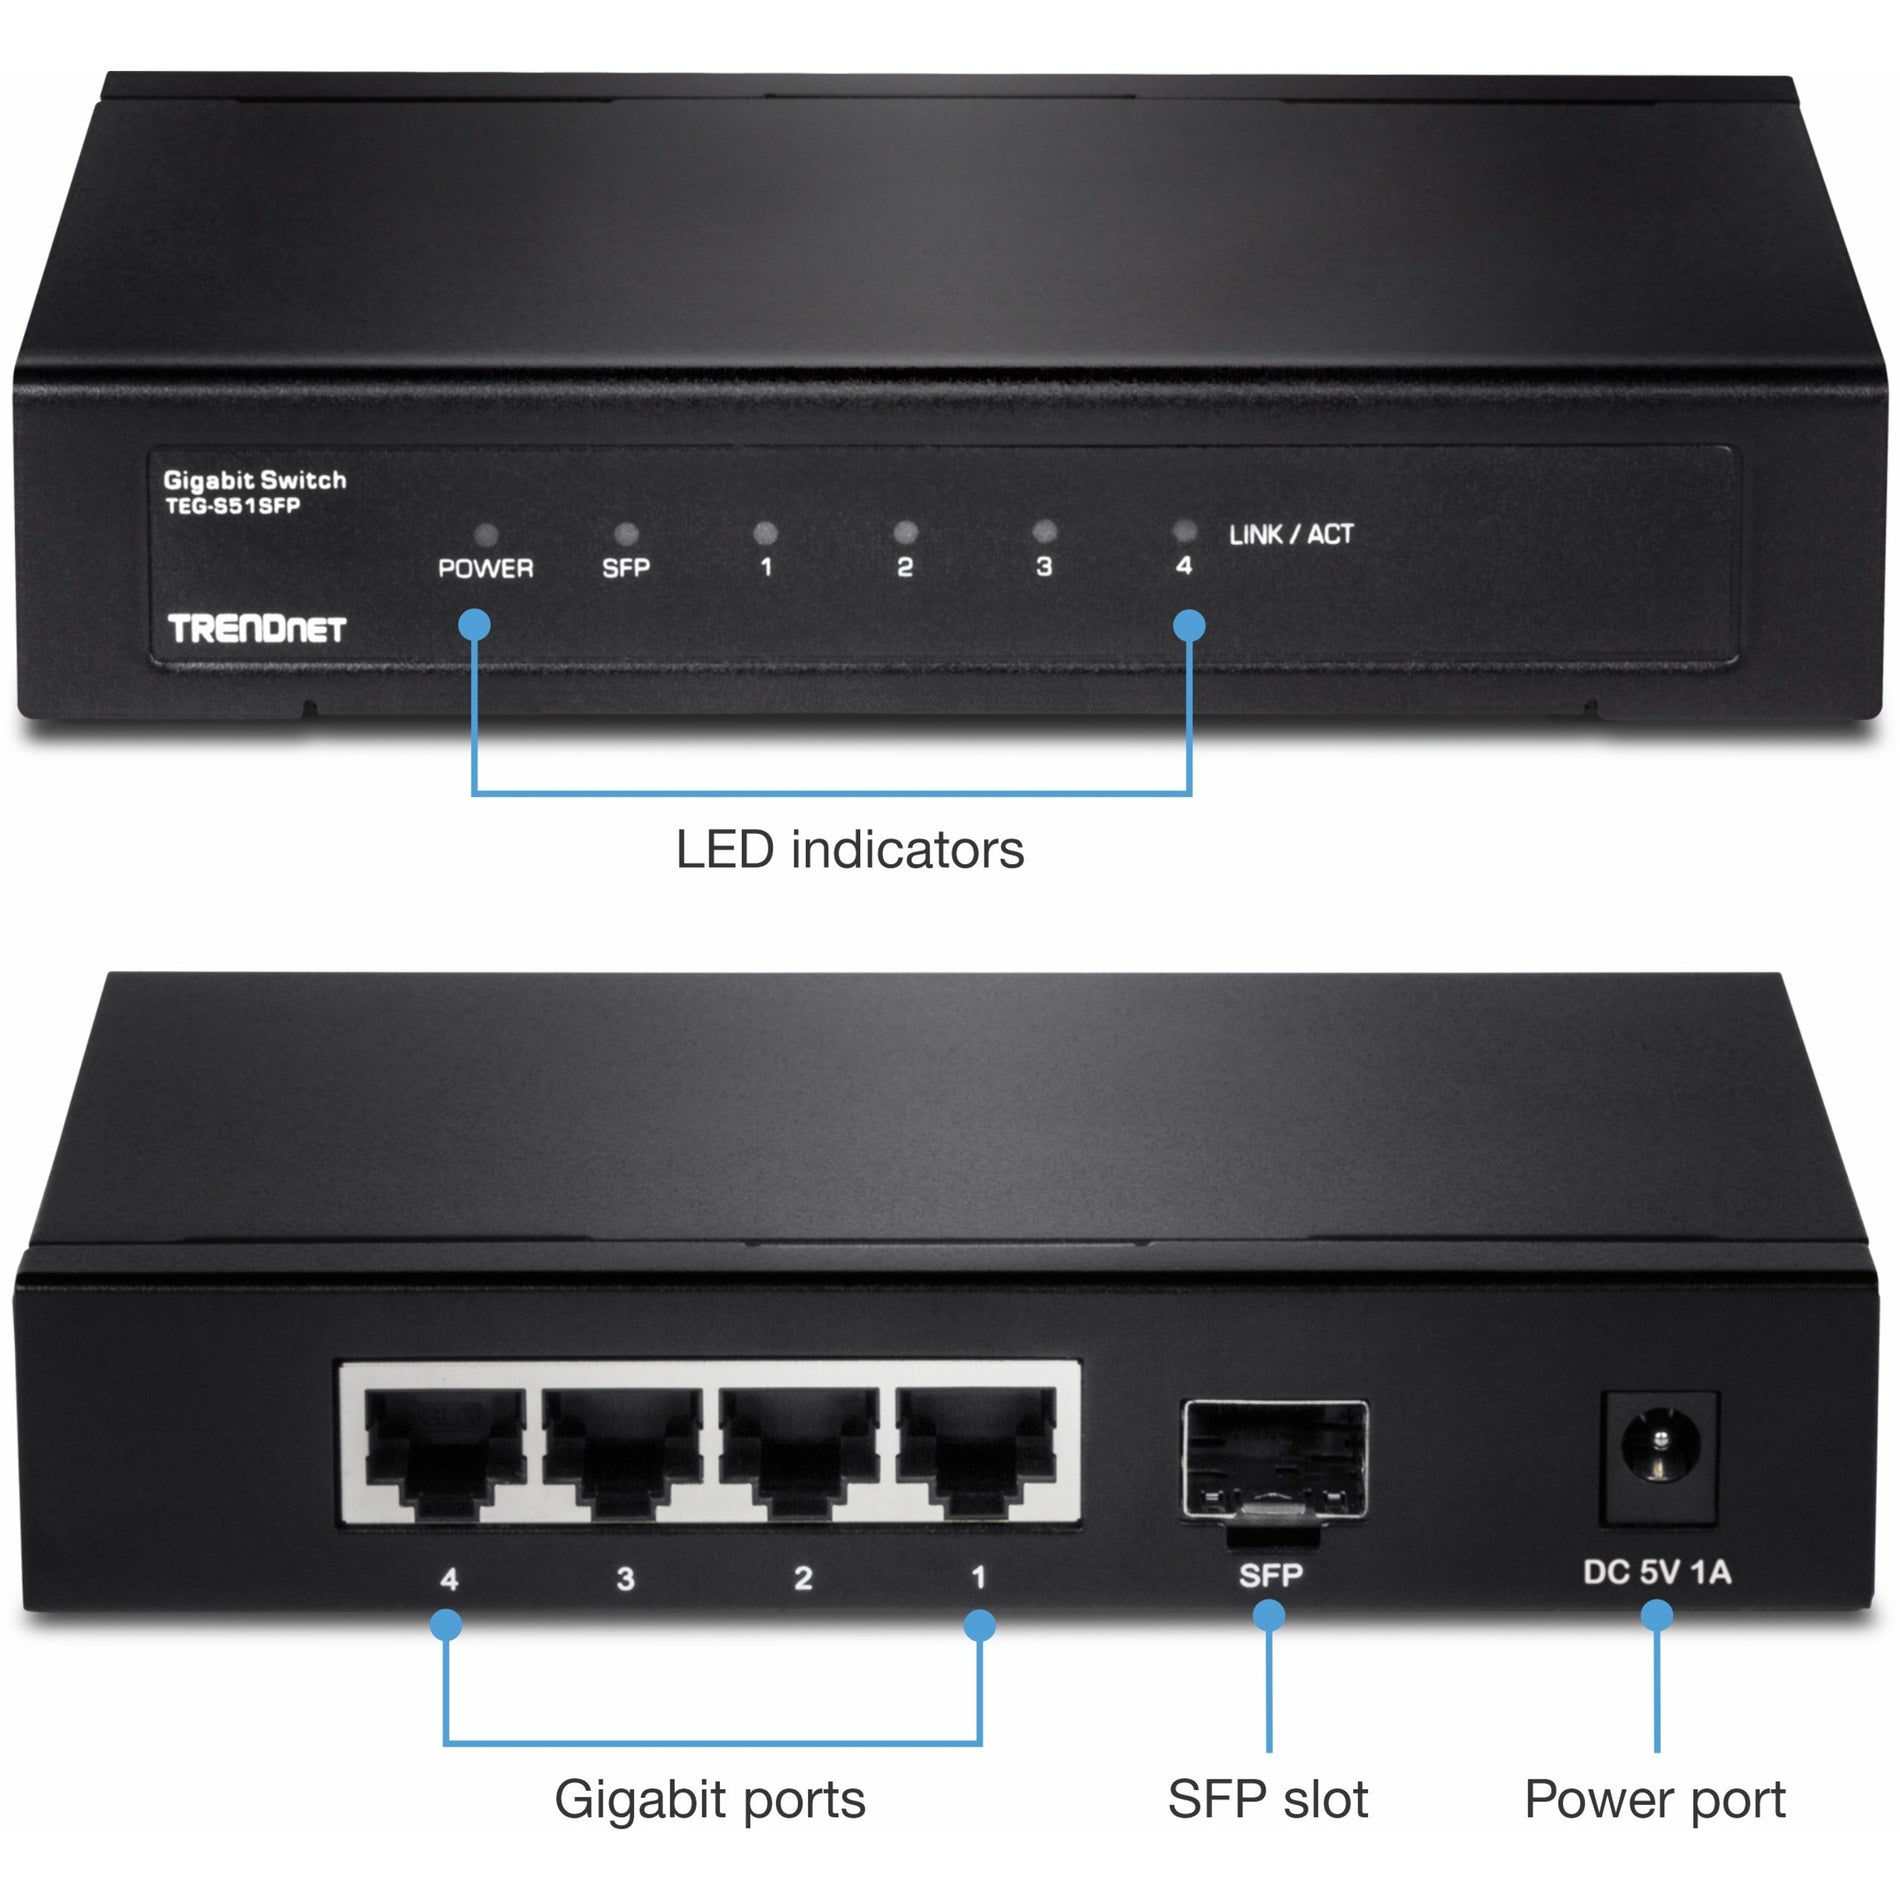 TRENDnet TEG-S51SFP Rear port 4-Port Gigabit Switch with SFP Slot (Metal), 10 Gbps Switching Capacity, Fanless, 802.1p QoS, Lifetime Protection